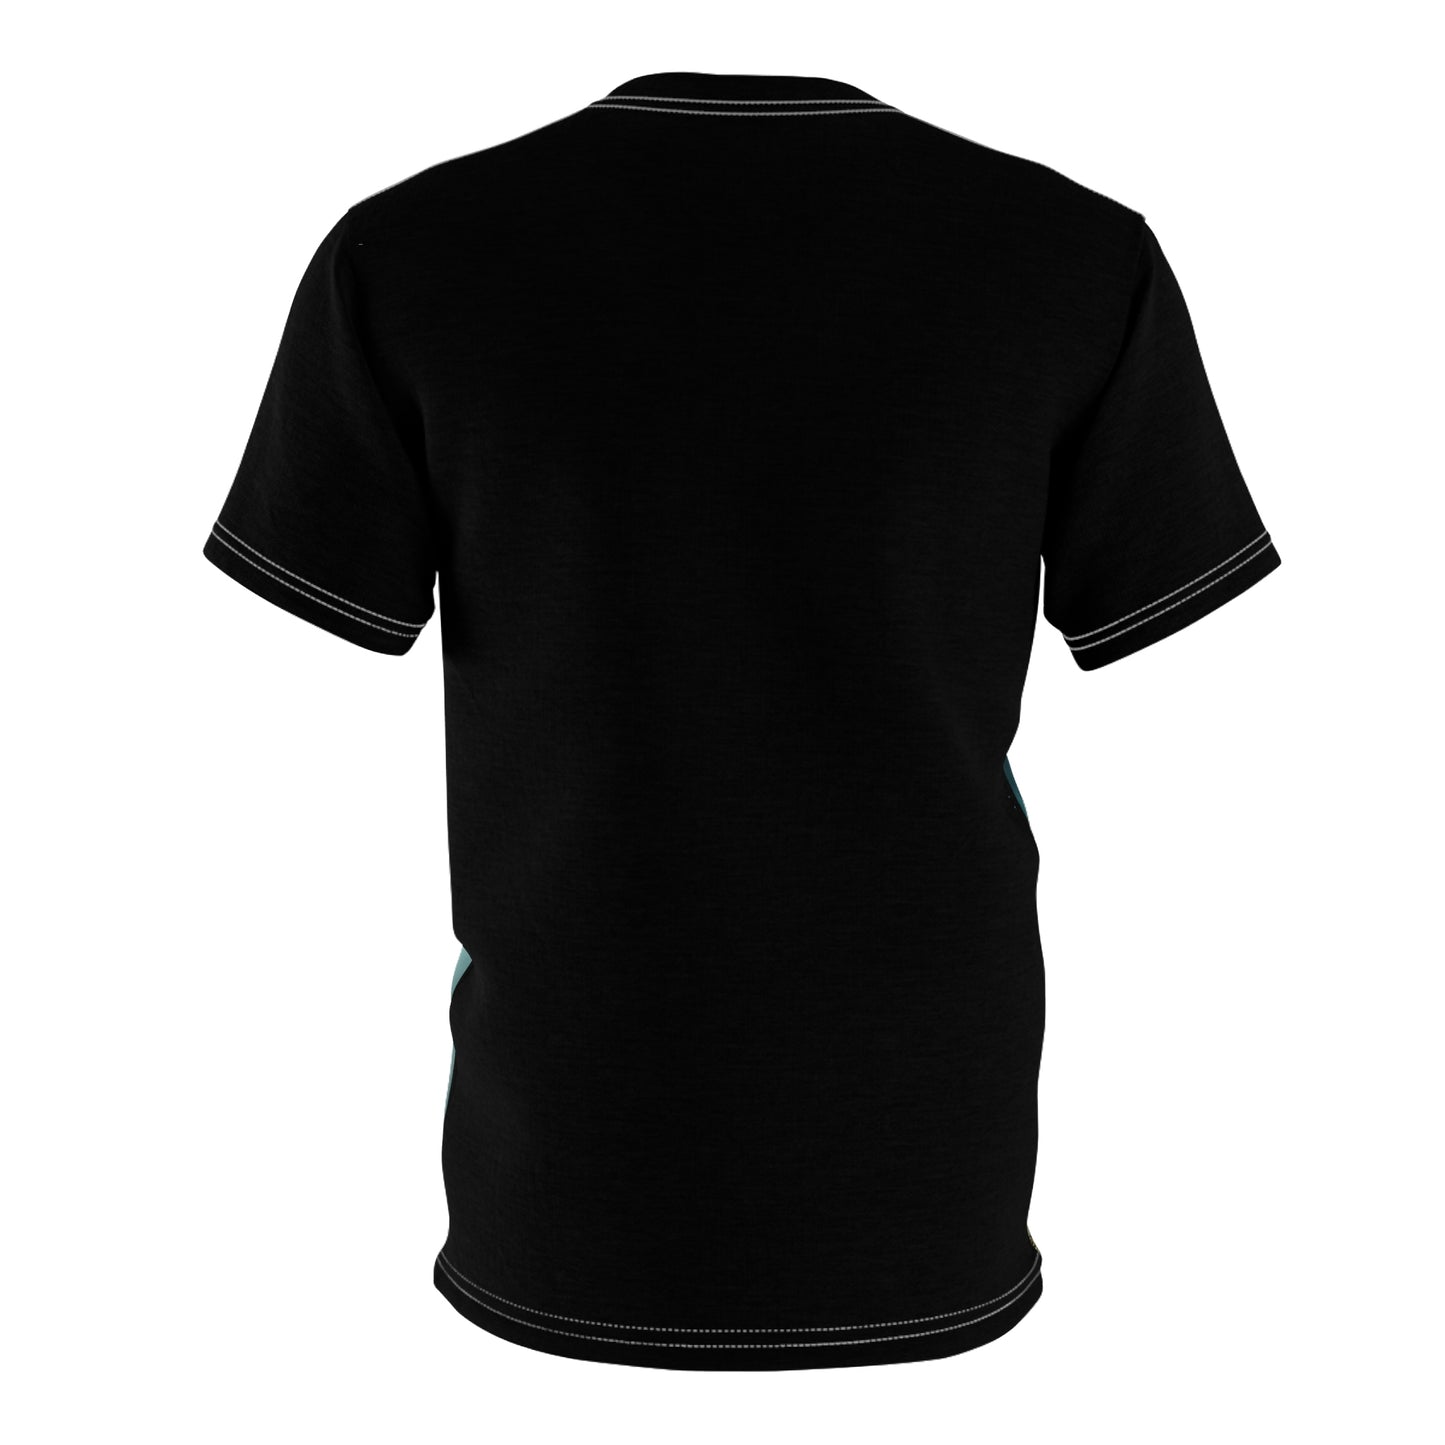 Gallowgate - Unisex All-Over Print Cut & Sew T-Shirt